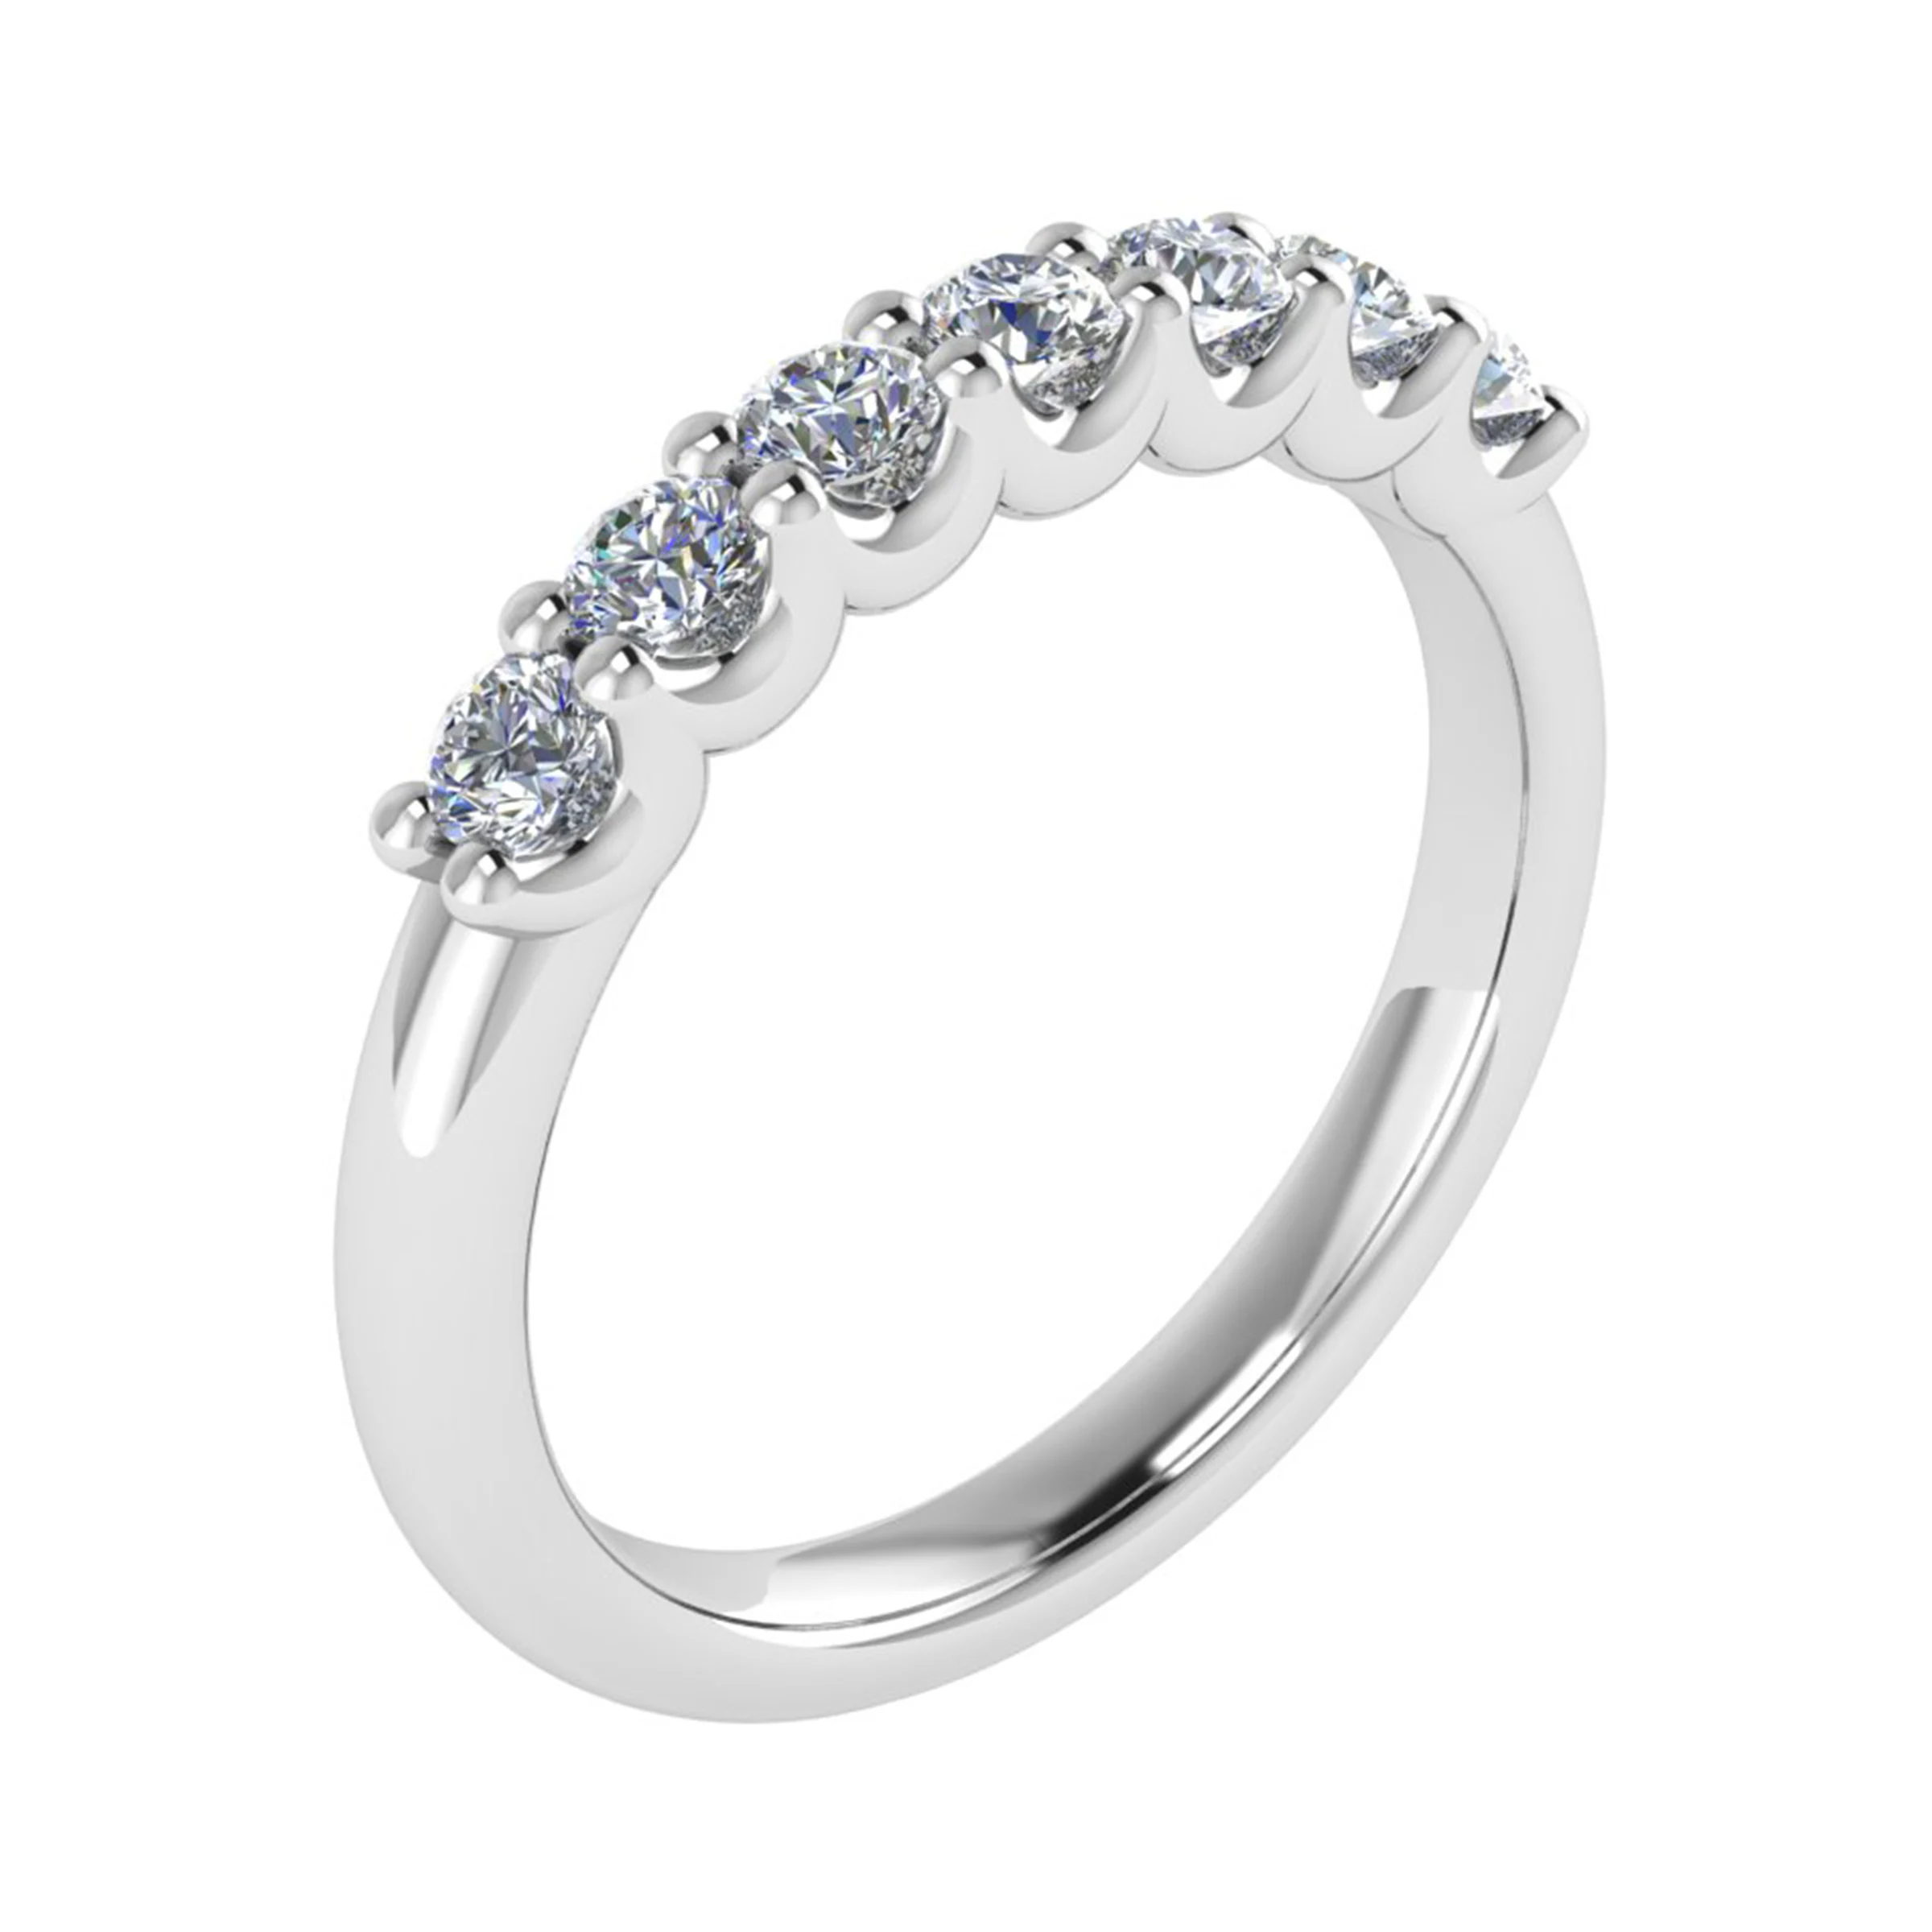 0.25 - 1.25 Carat Lab-Created 7 Stone Diamond Rings